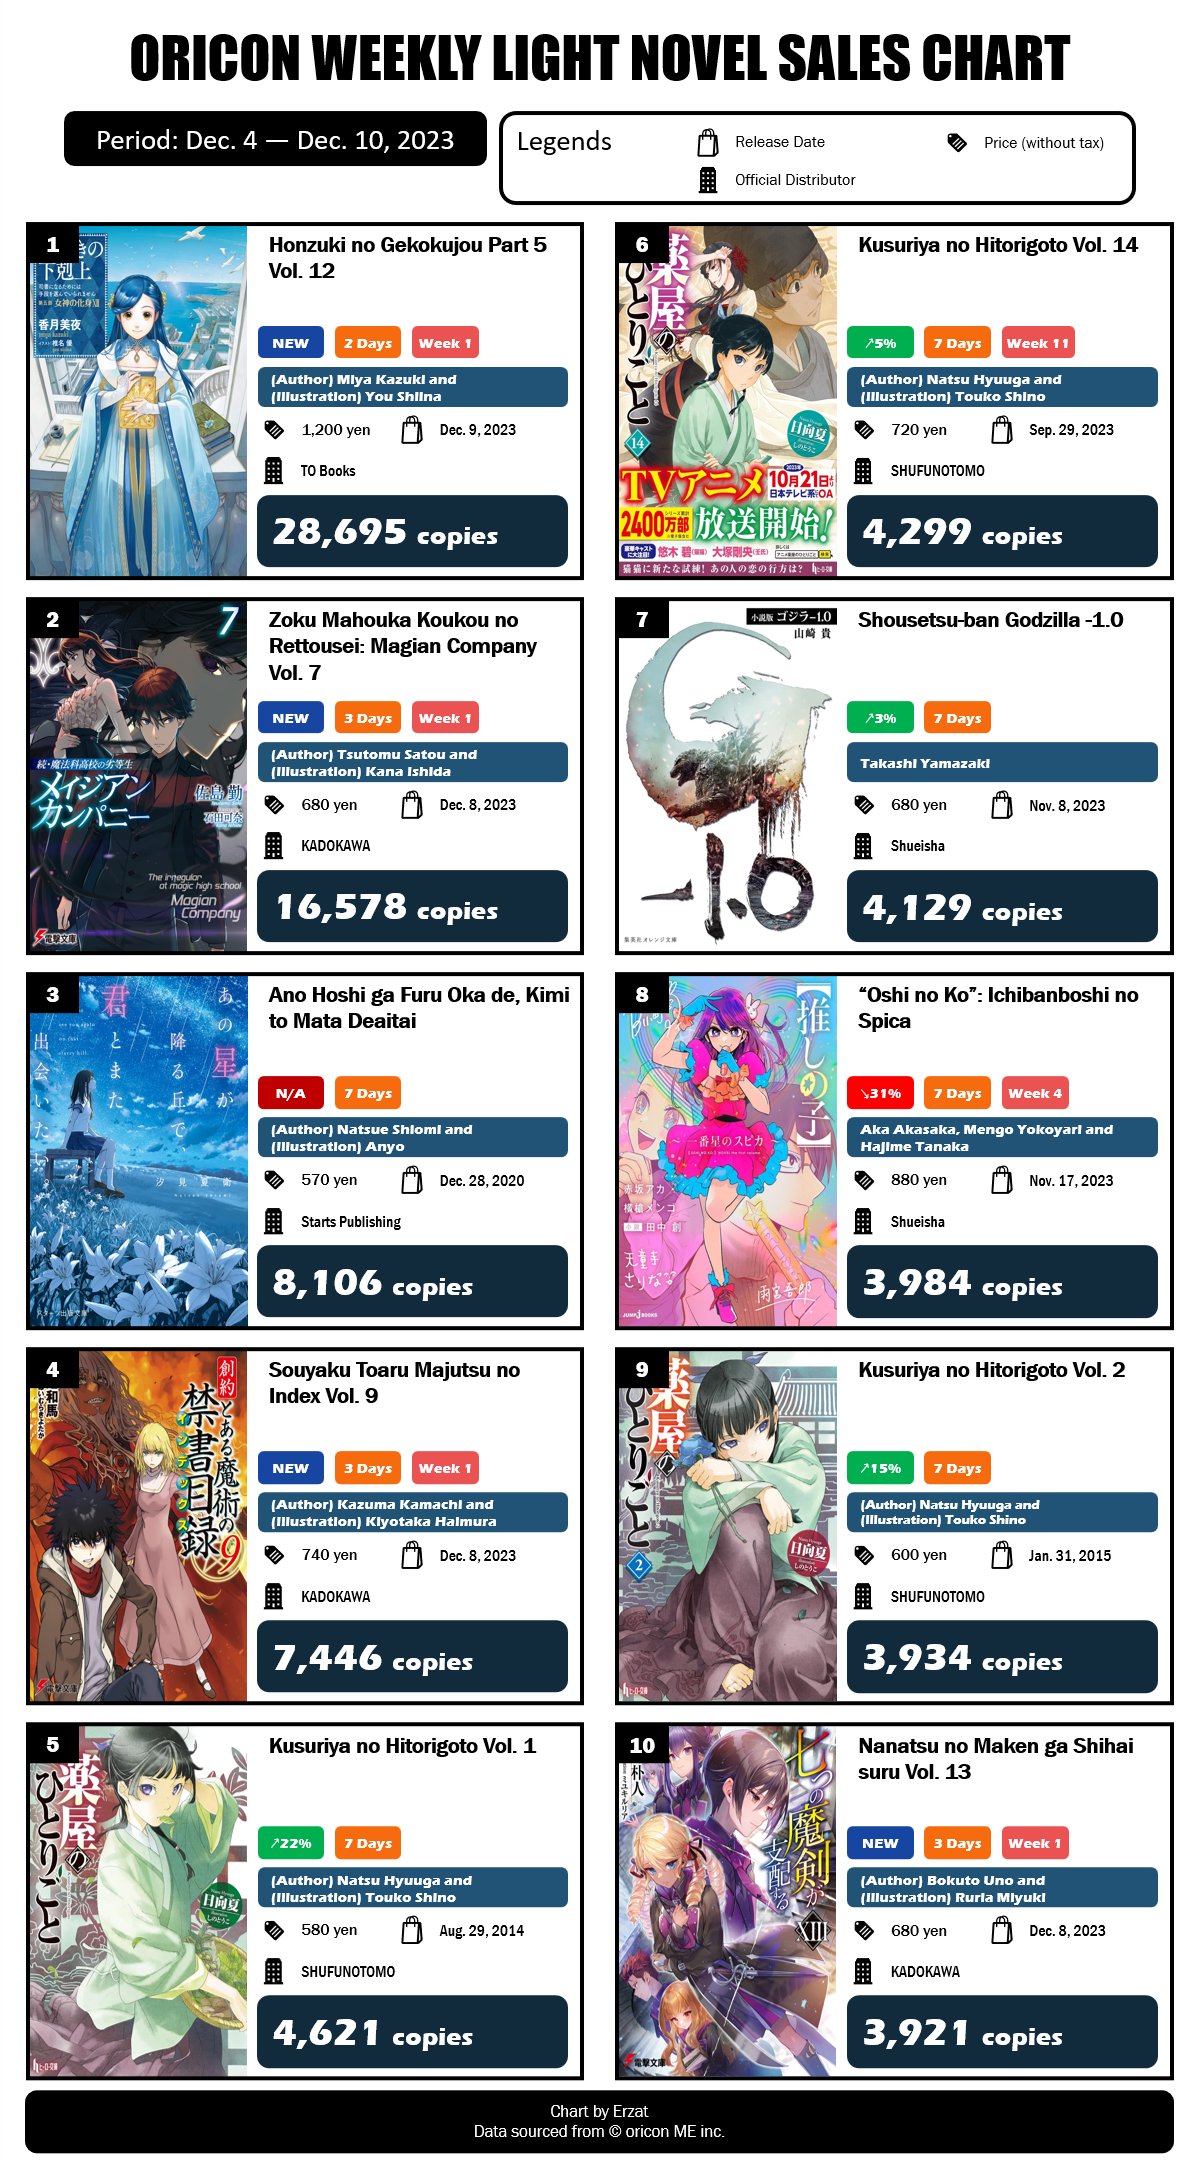 Japan Top Weekly Manga Sales Ranking: September 5 - September 11, 2022 -  Erzat